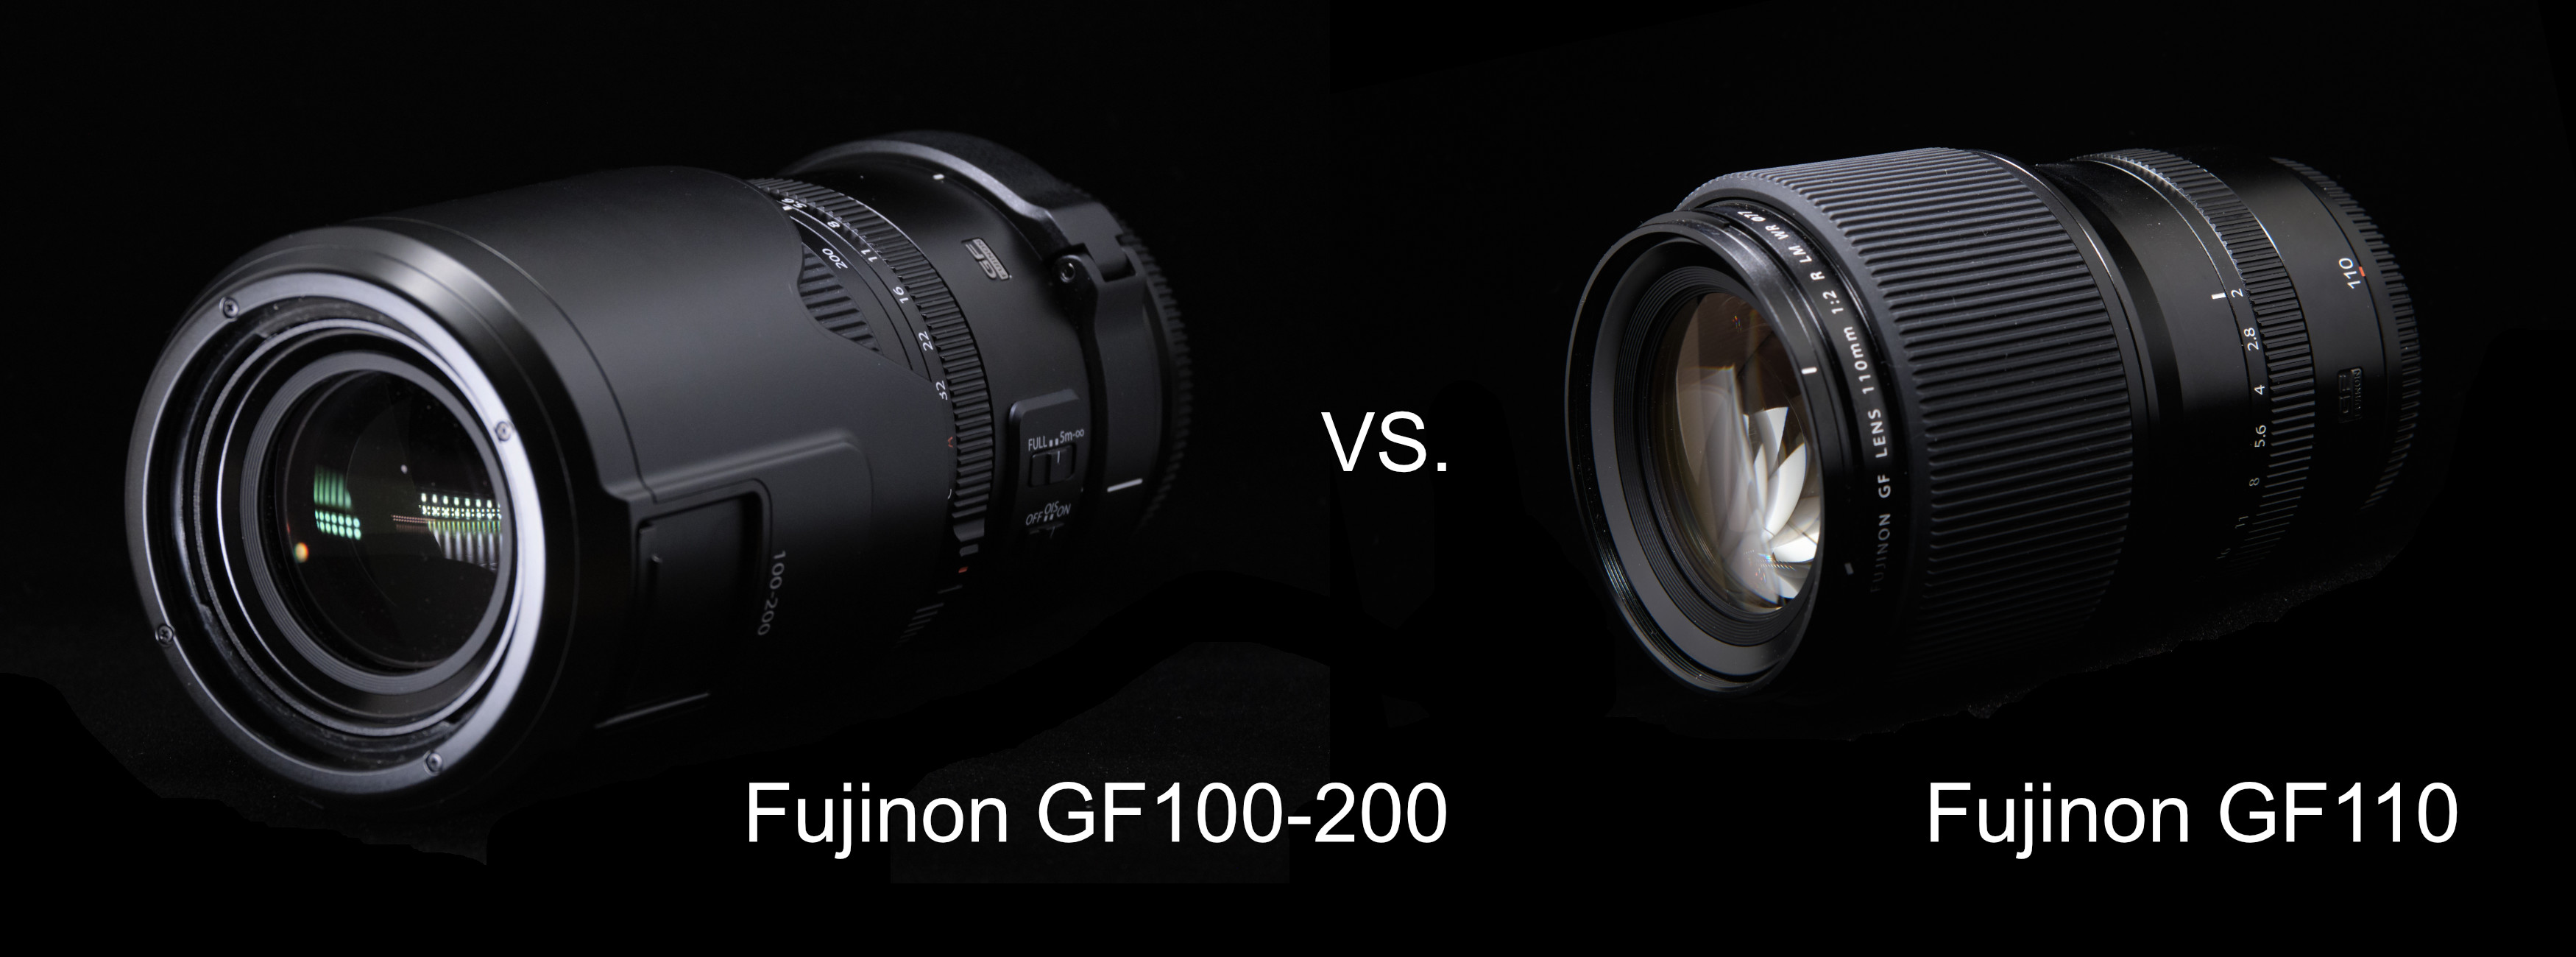 Fujinon GF110 vs. GF100-200 side by side